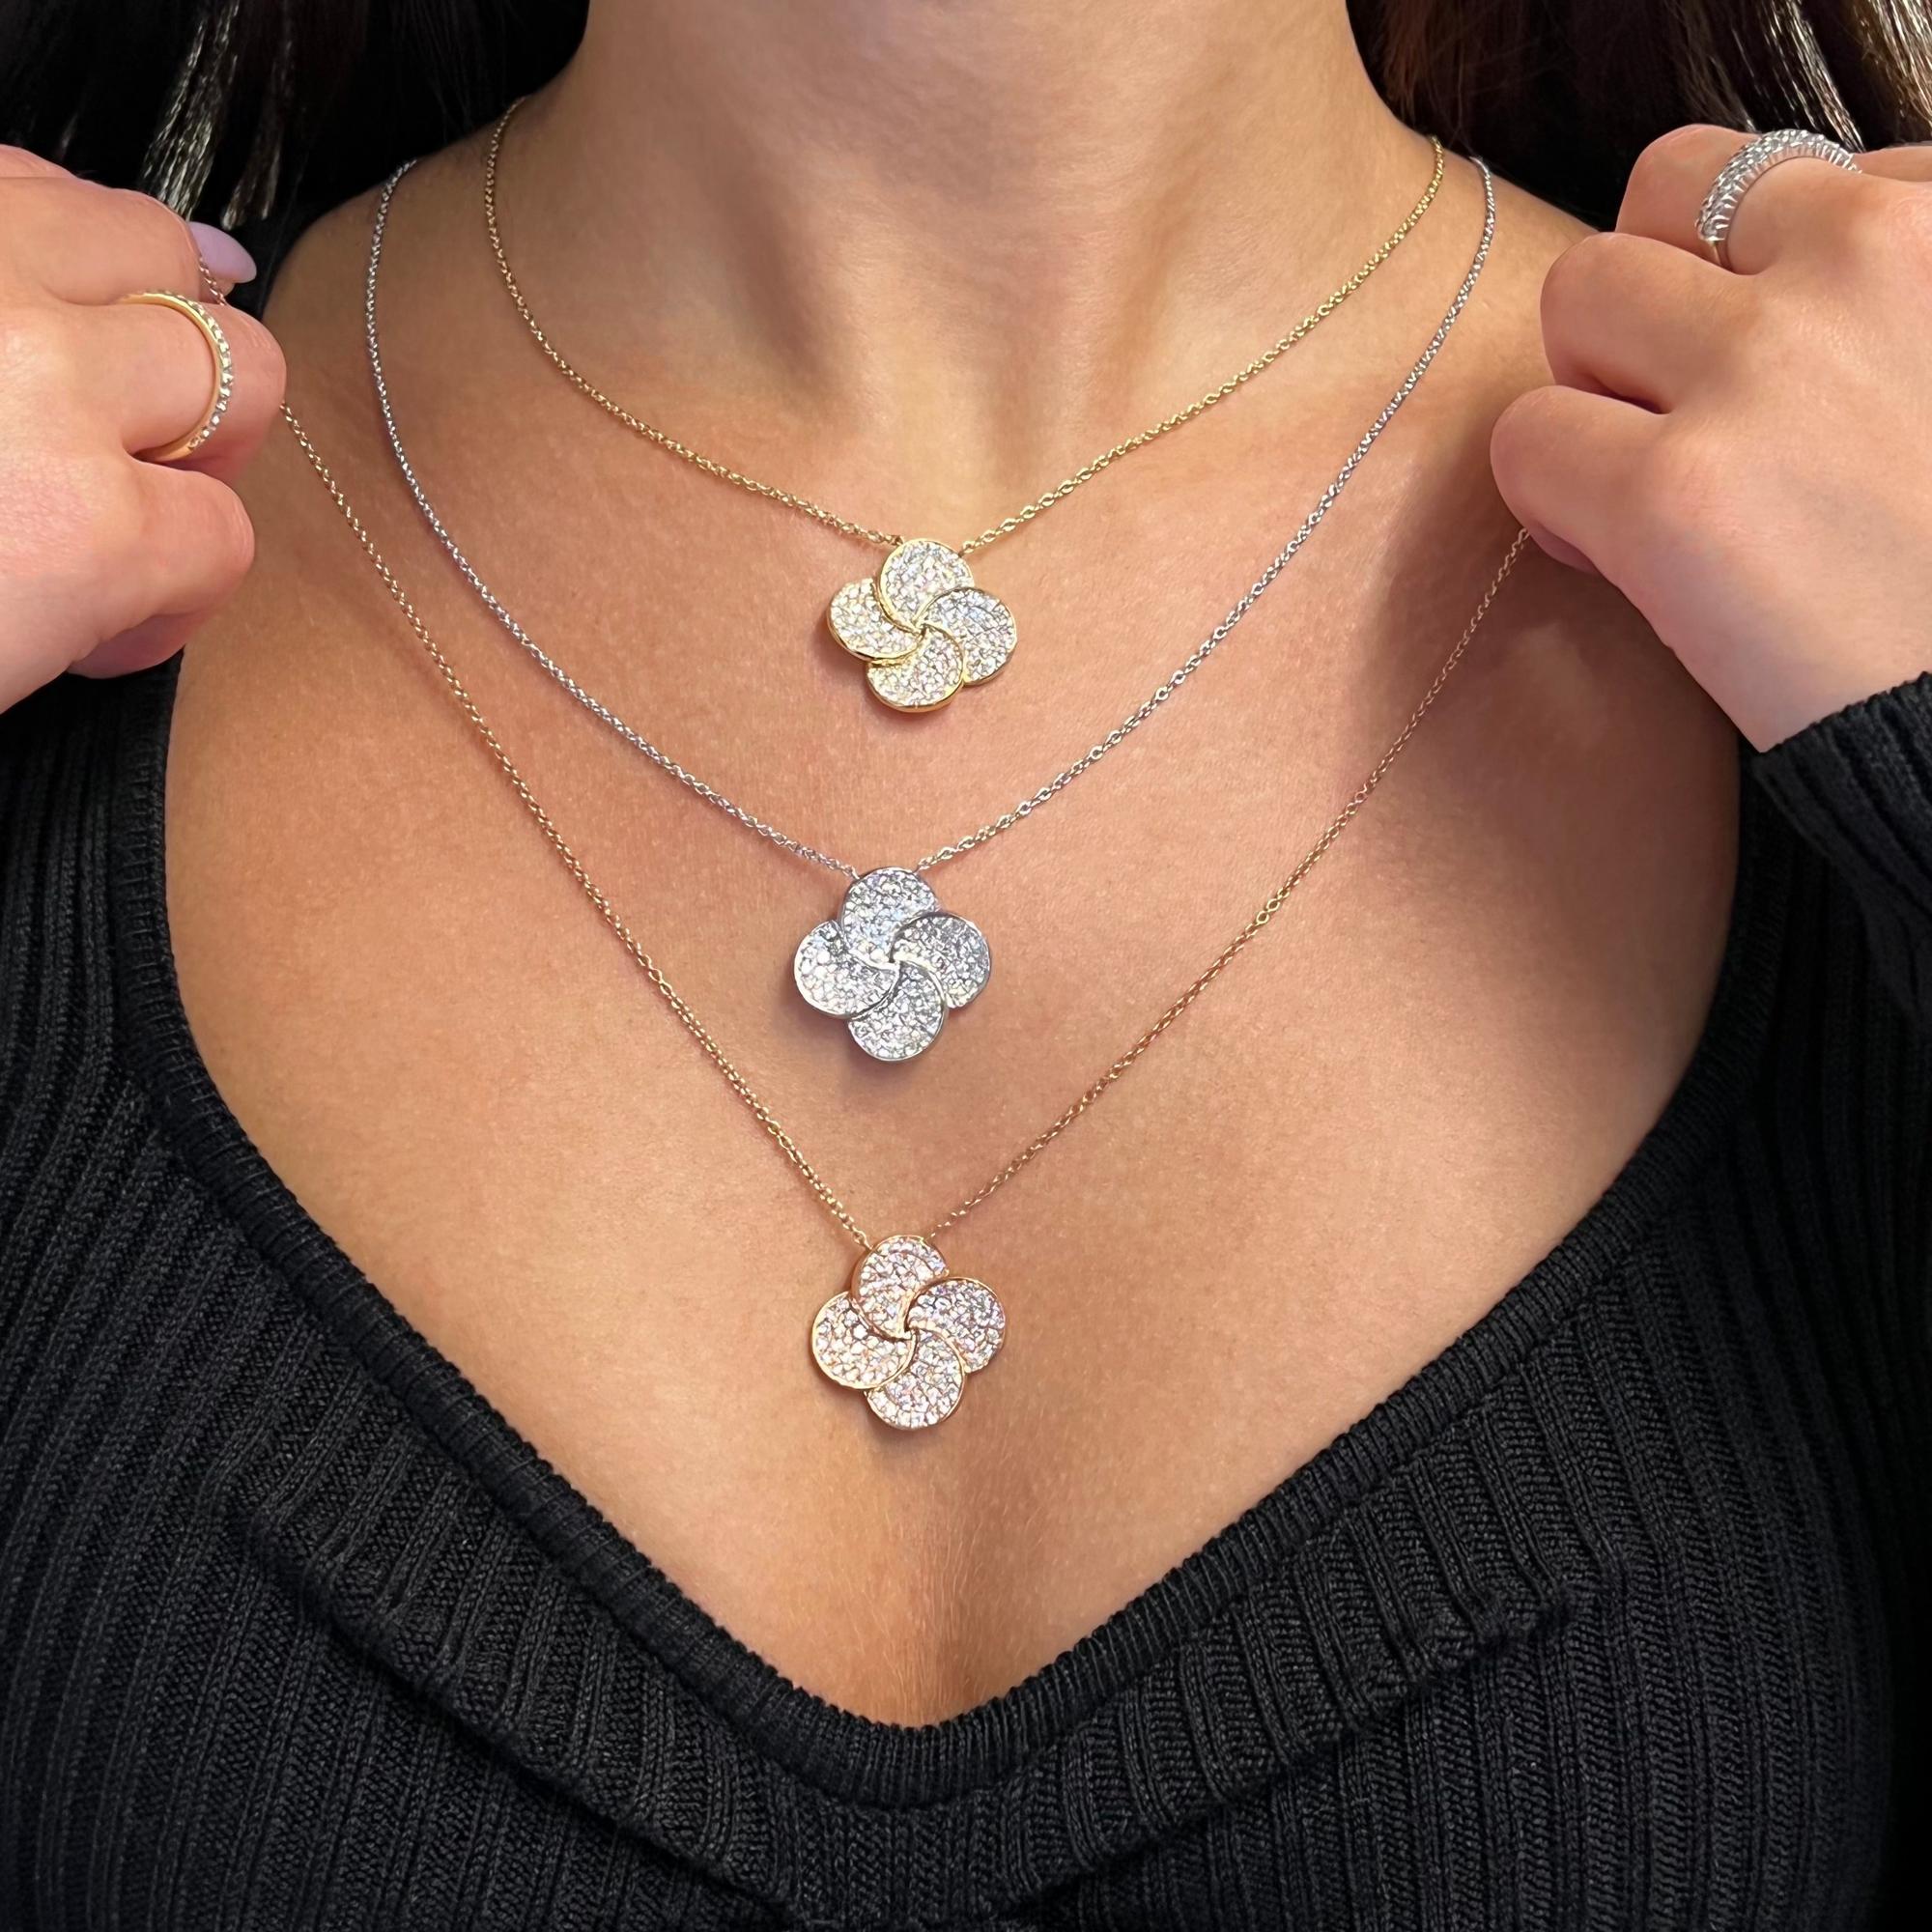 Women's 1.77Cttw Pave Set Round Cut Diamond Flower Pendant Necklace 18K Yellow Gold For Sale